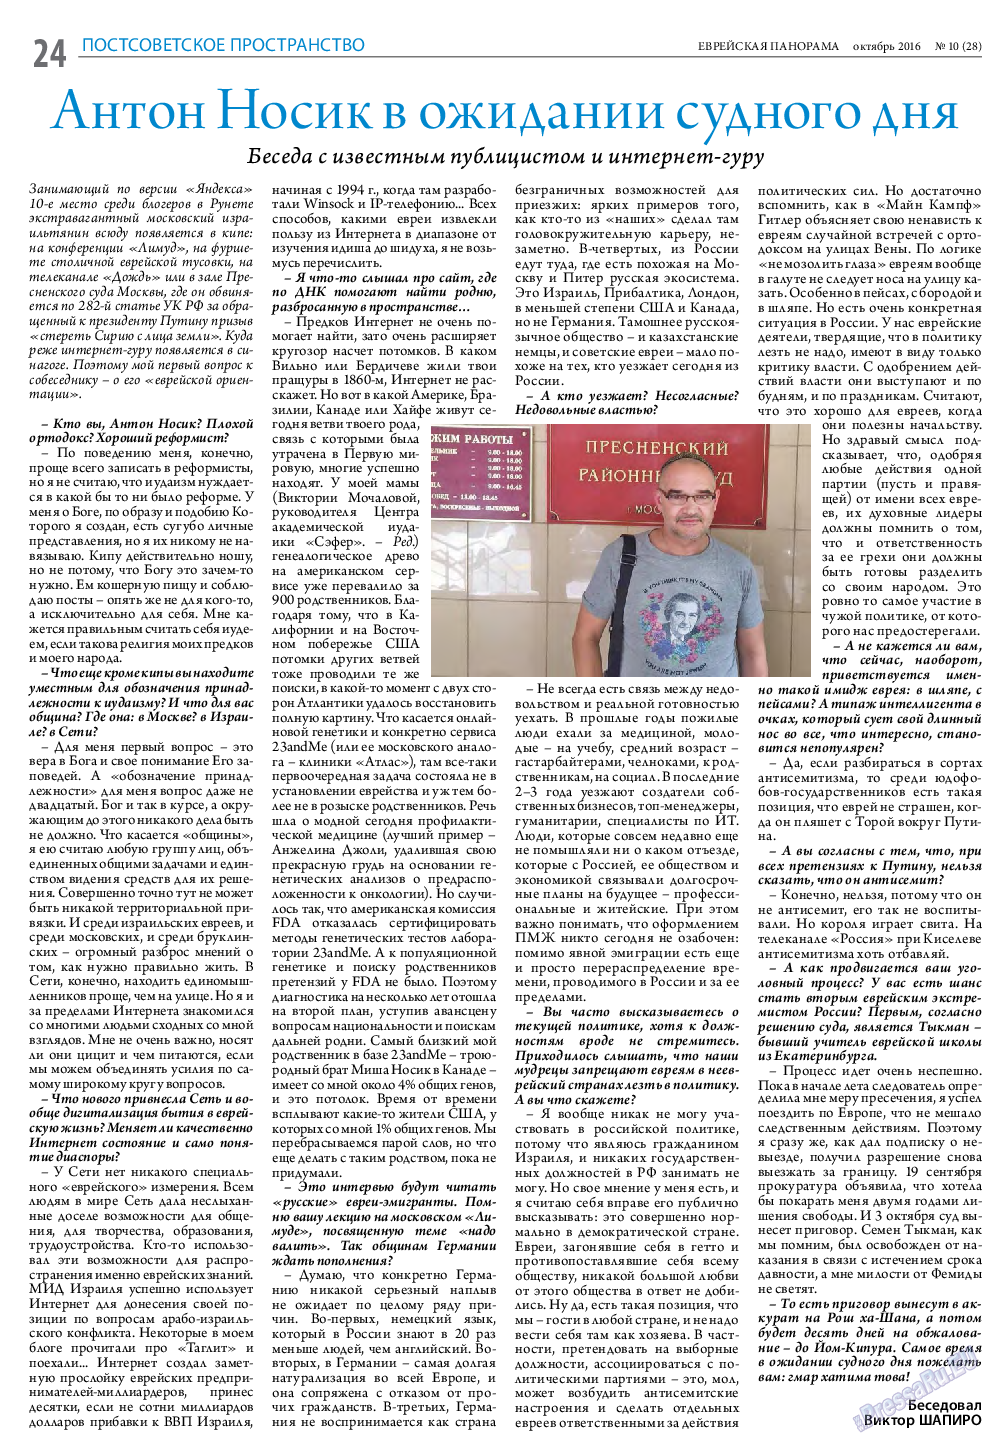 Еврейская панорама, газета. 2016 №10 стр.24